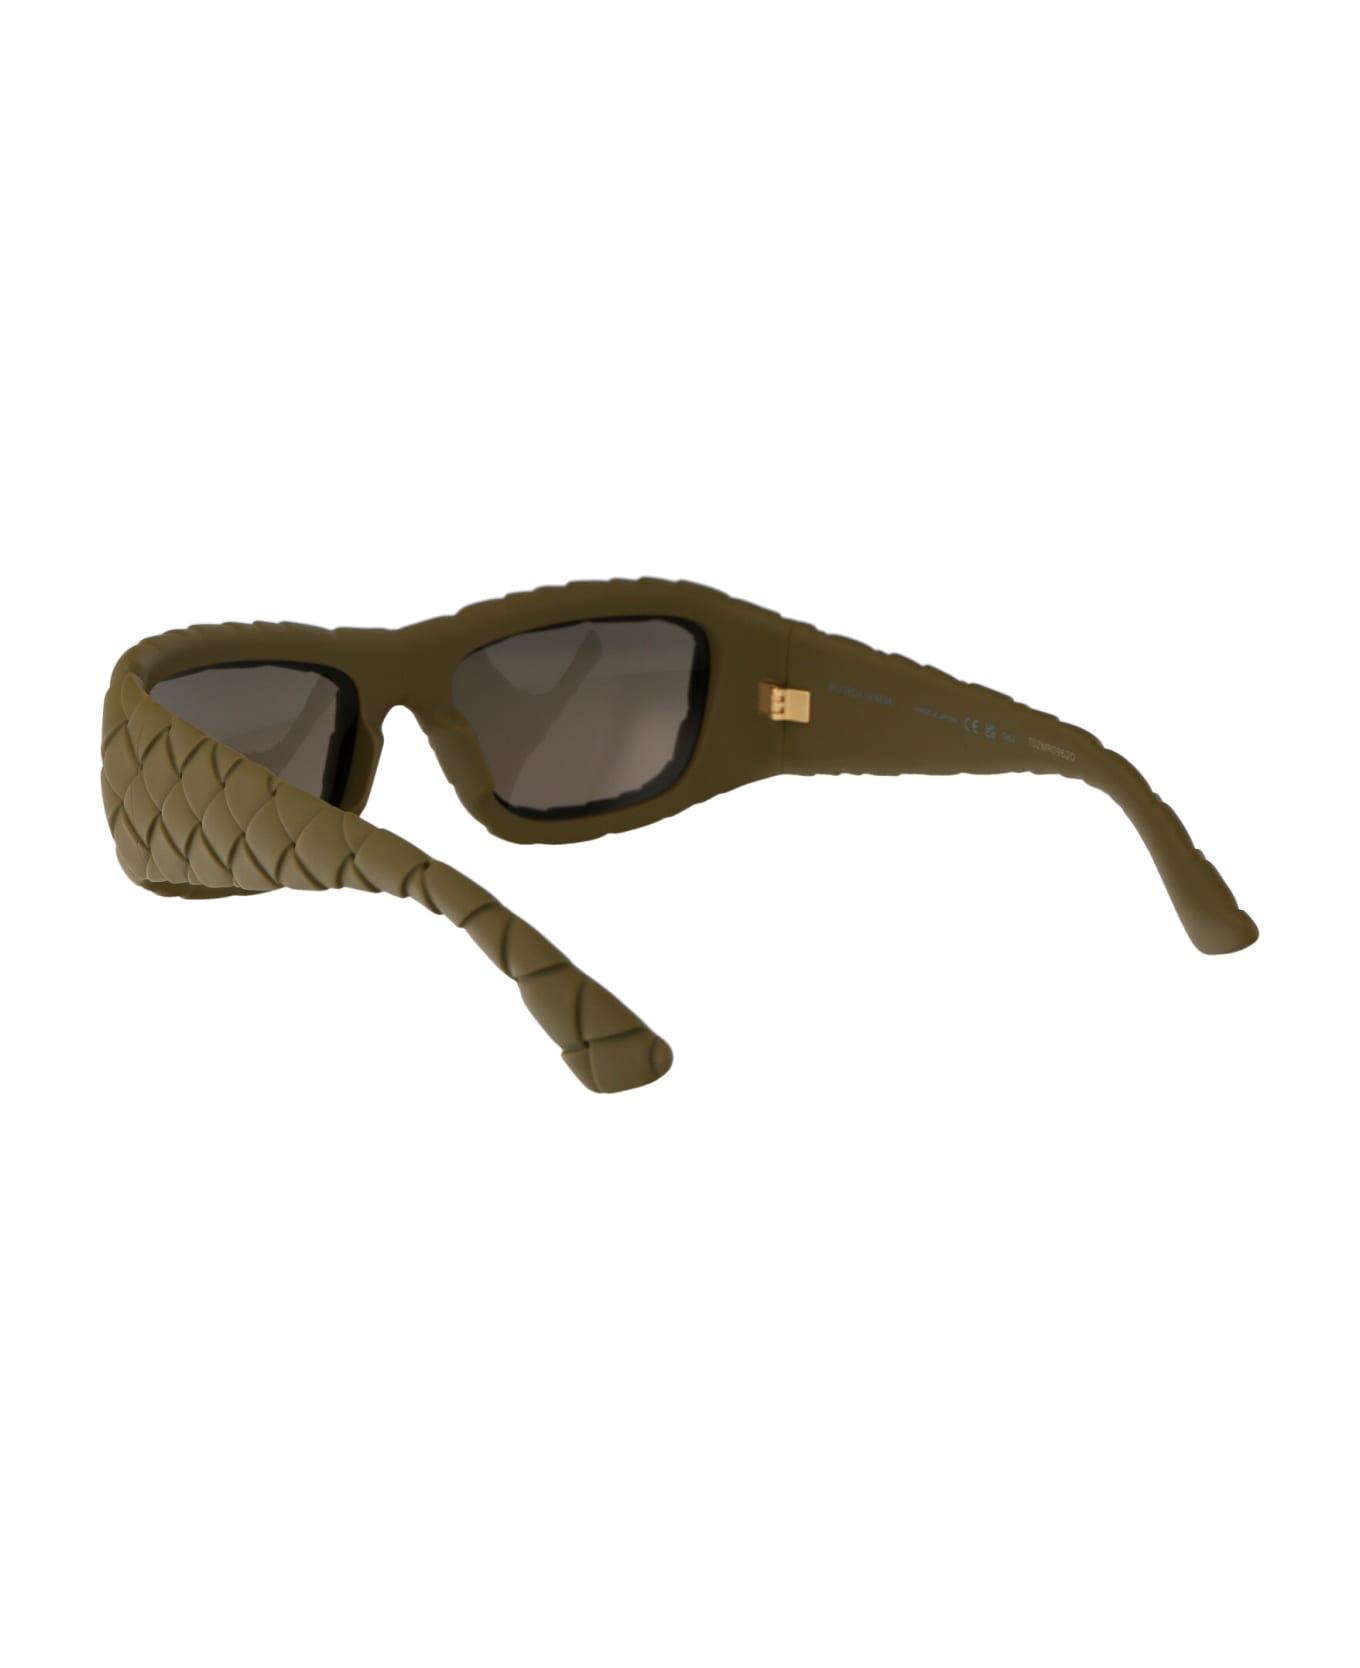 Bottega Veneta Eyewear Bv1303s Sunglasses - 002 GREEN GREEN BROWN